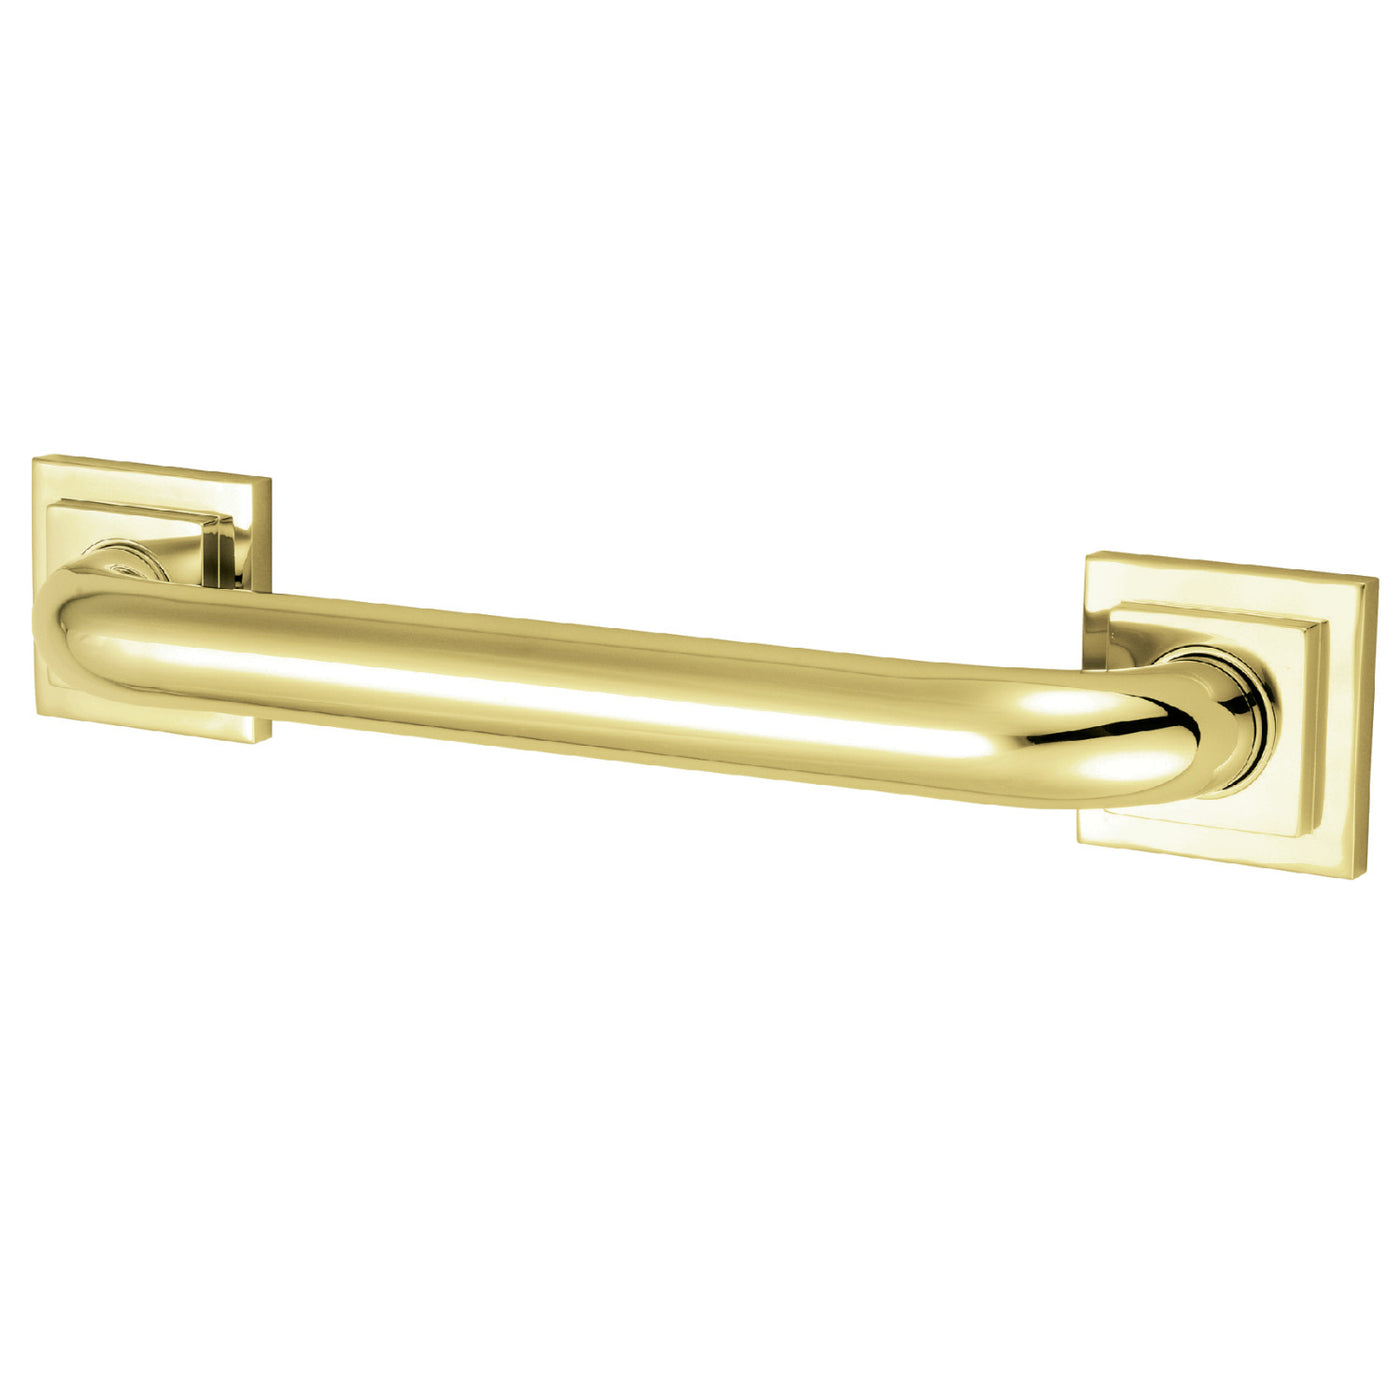 Elements of Design EDR614182 18-Inch x 1-1/4-Inch O.D Grab Bar, Polished Brass